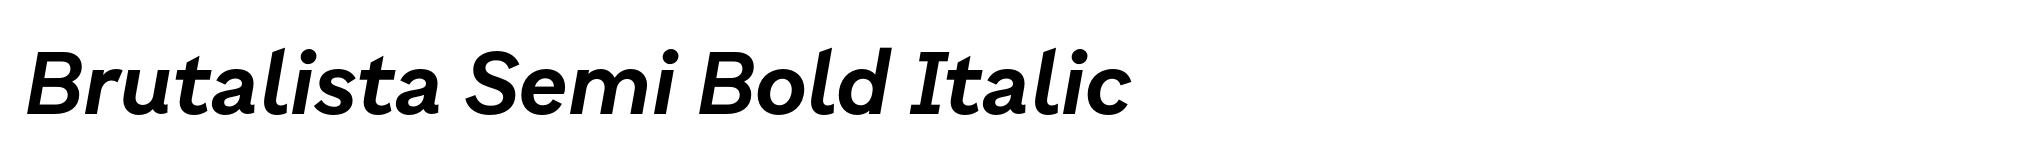 Brutalista Semi Bold Italic image